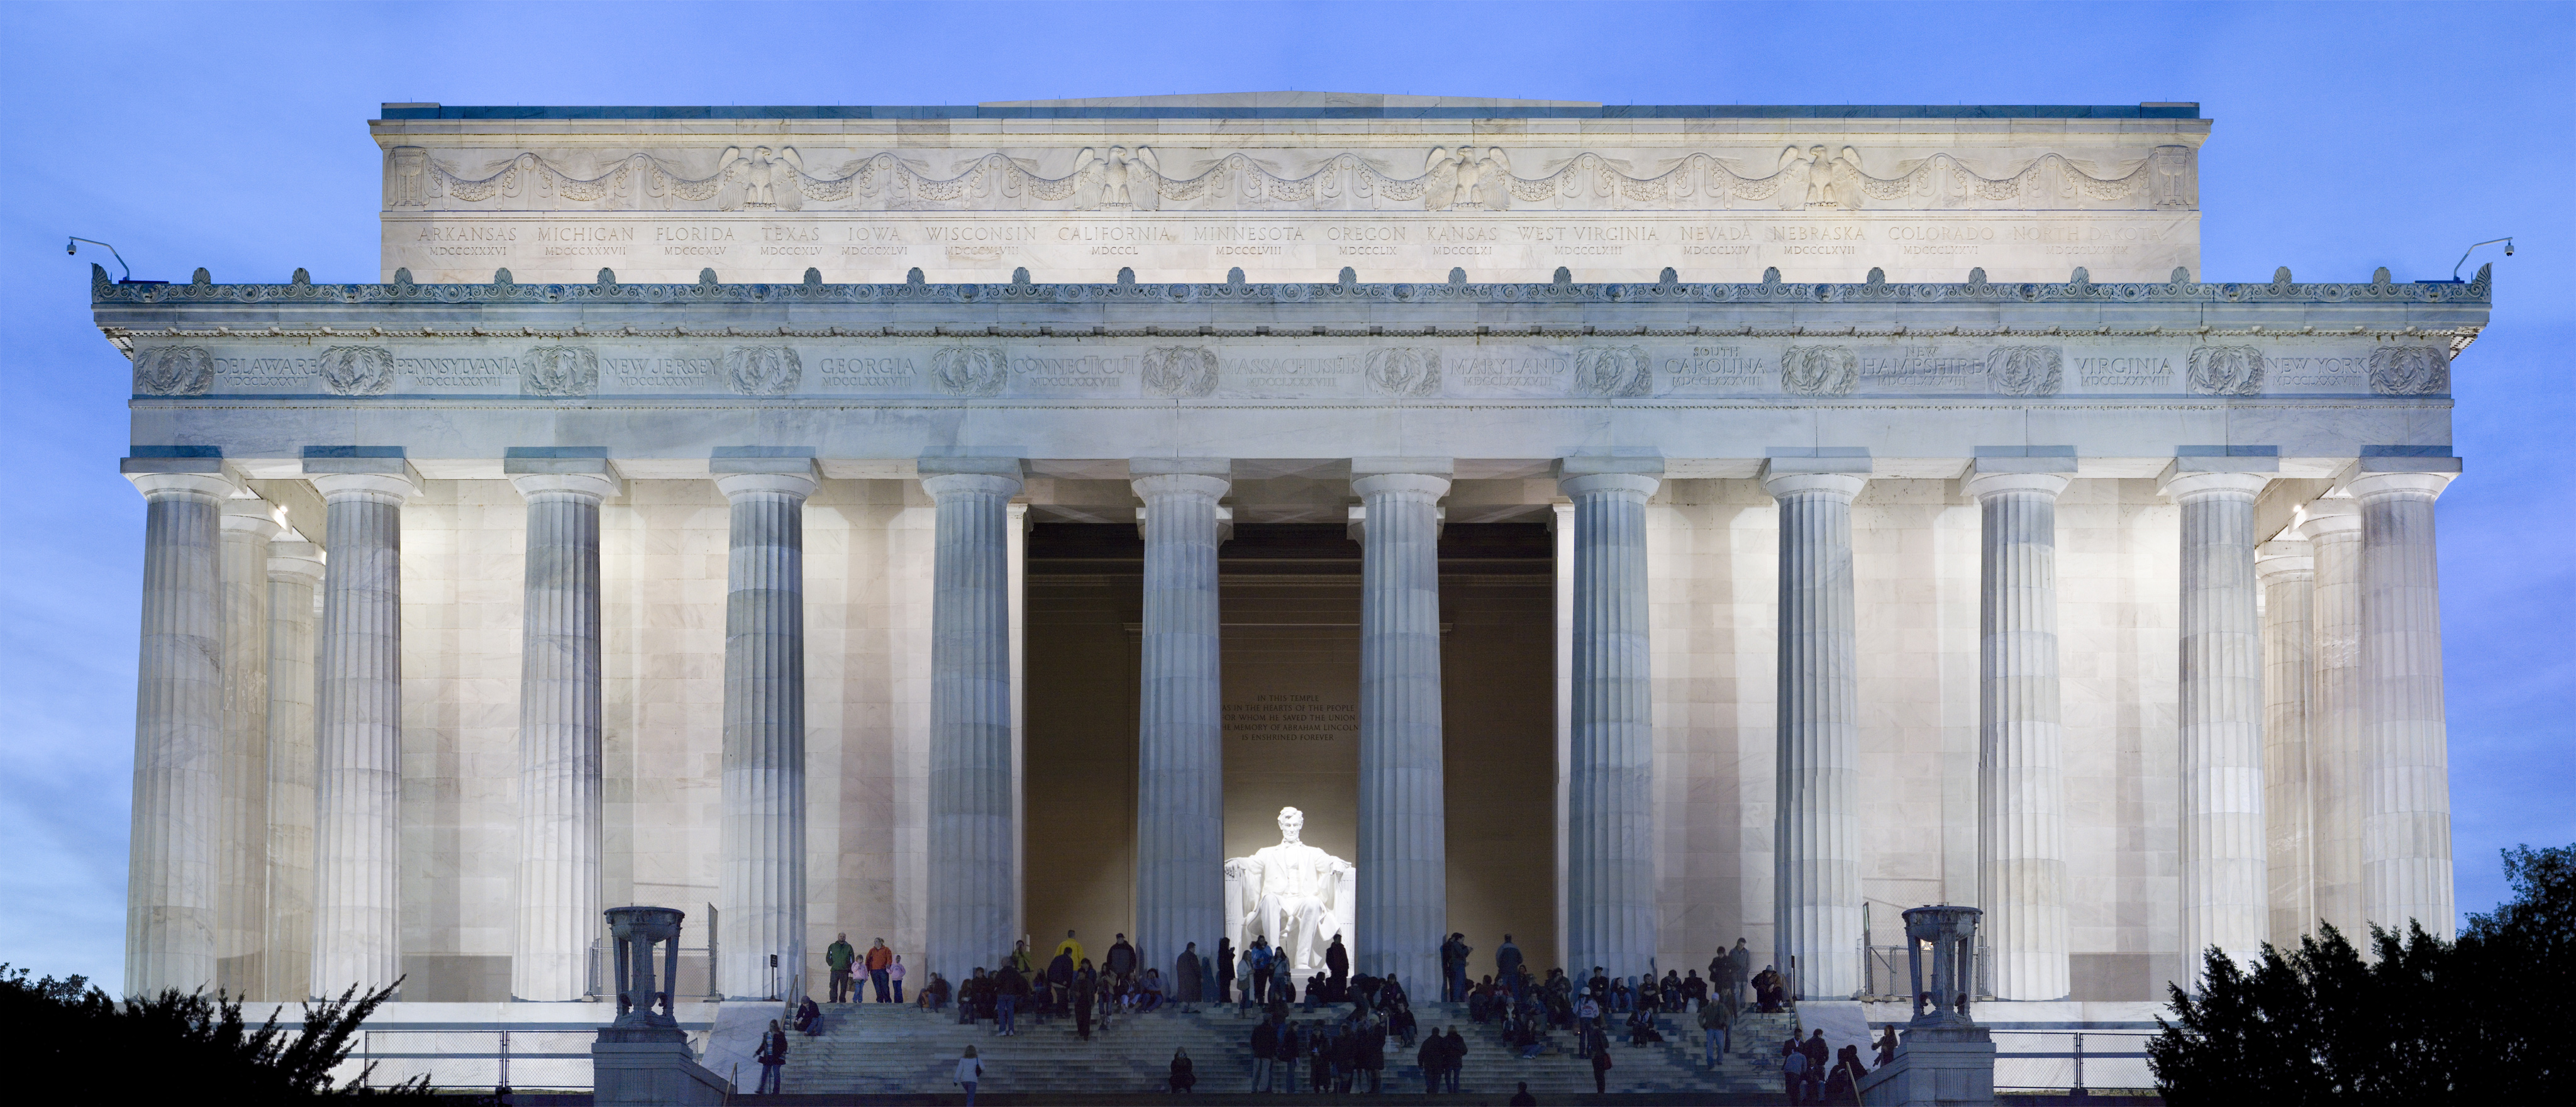 File:Lincoln Memorial Twilight.jpg - Wikimedia Commons